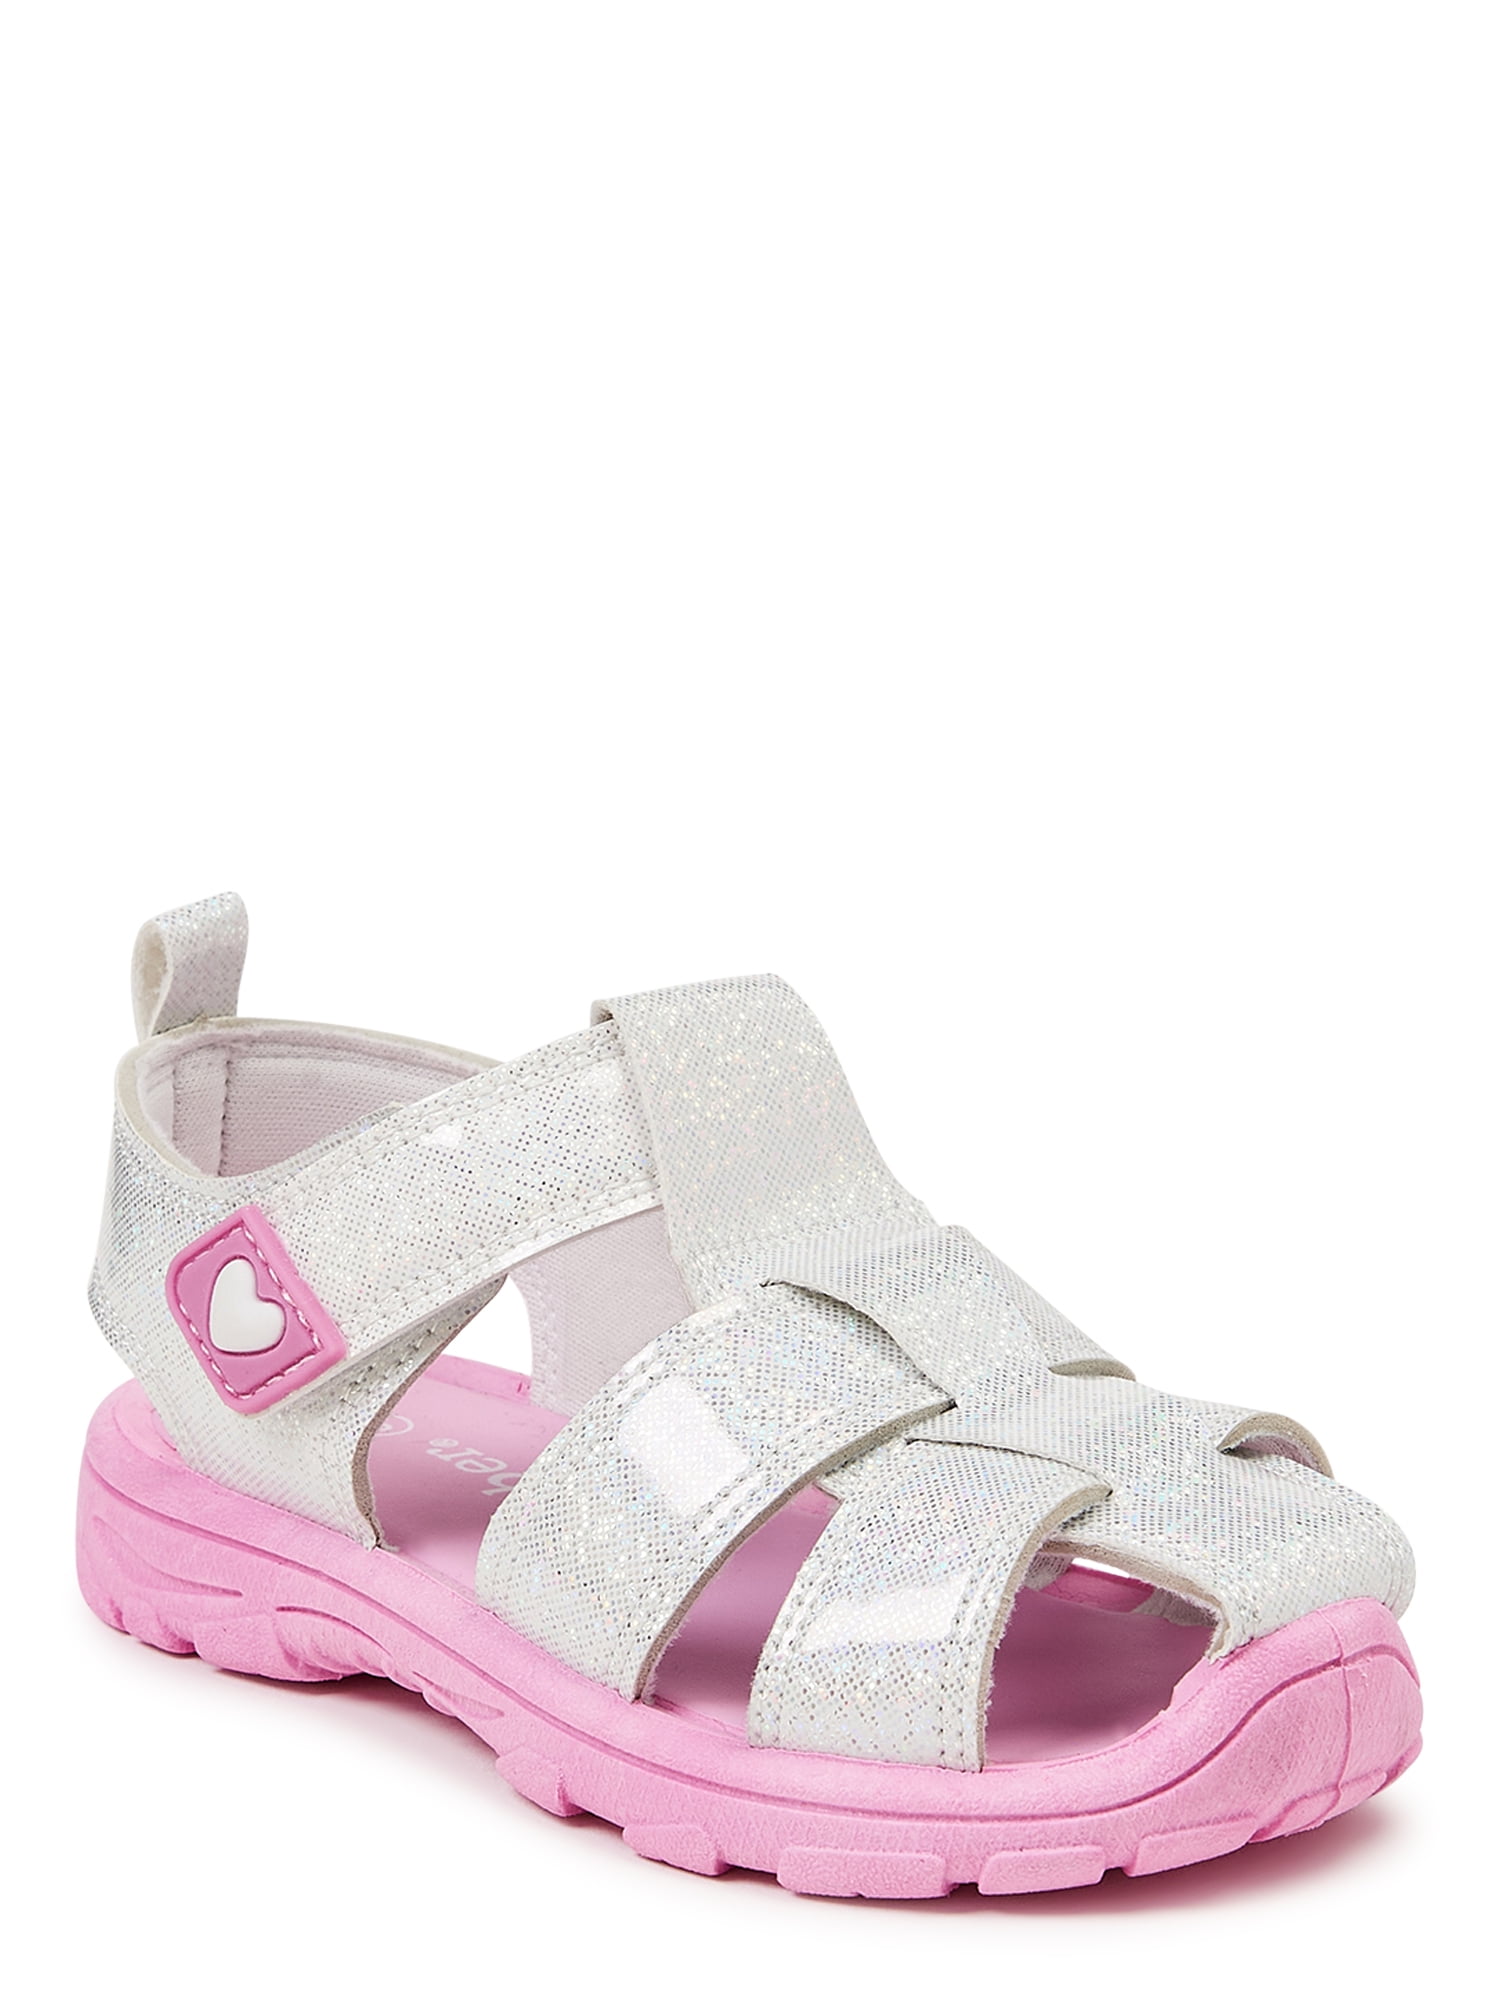 Gerber Toddler Girls Closed Toe Fisherman Sandals, Sizes 7-10 - Walmart.com